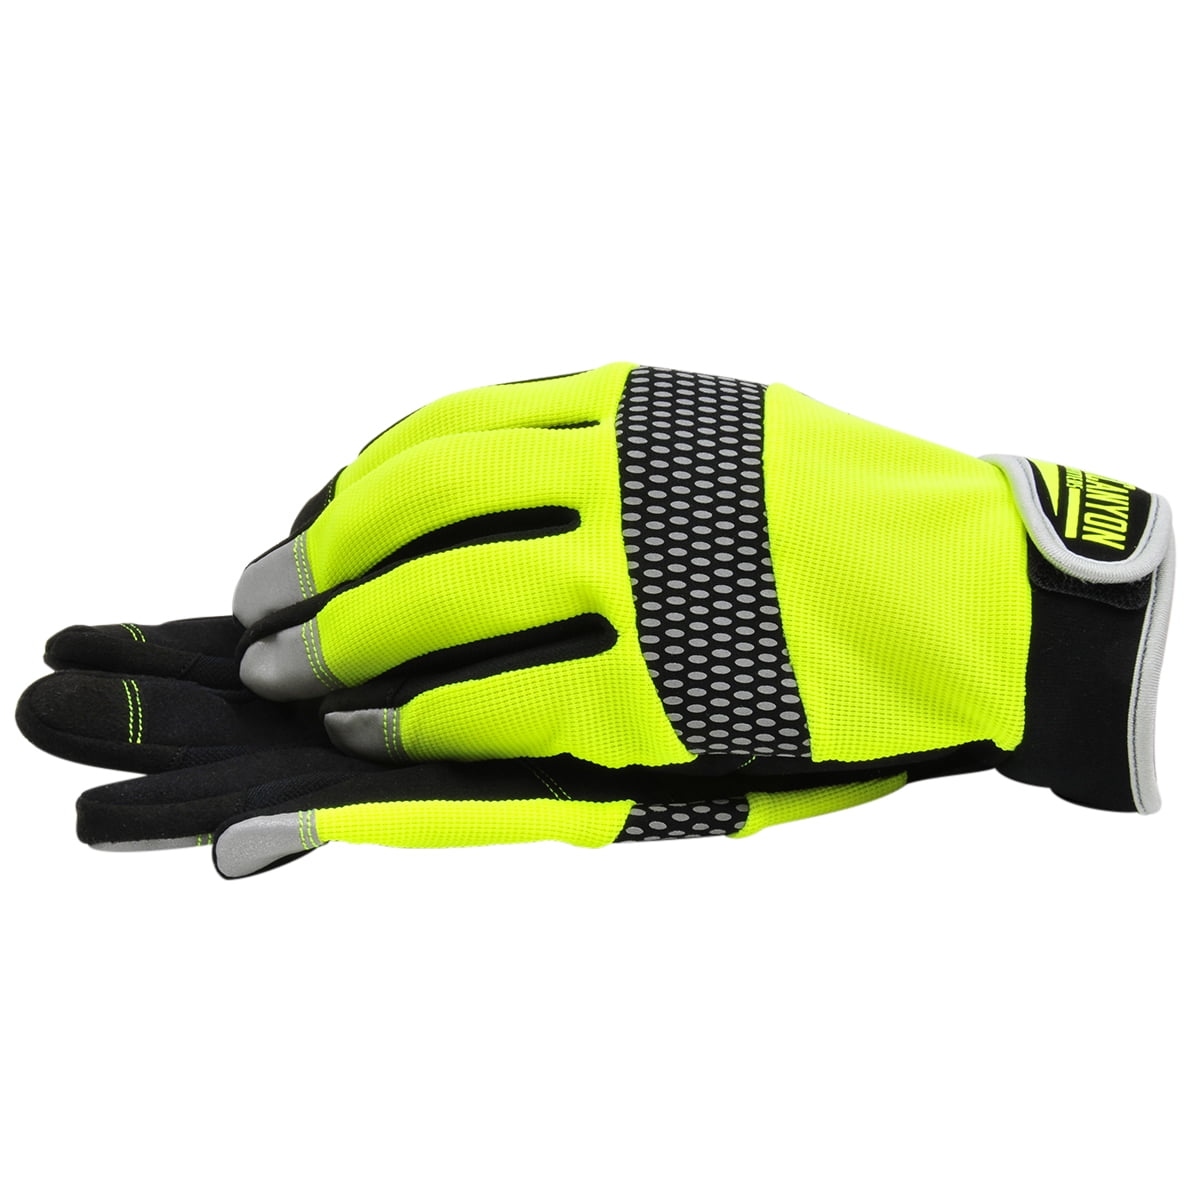 Vgo 3-Pairs High Dexterity Soft Genuine Goat Leather Palm Touchscreen  Construction Maintenance Light Duty Work Gloves (Size L, 3 Colors, GA7673)  